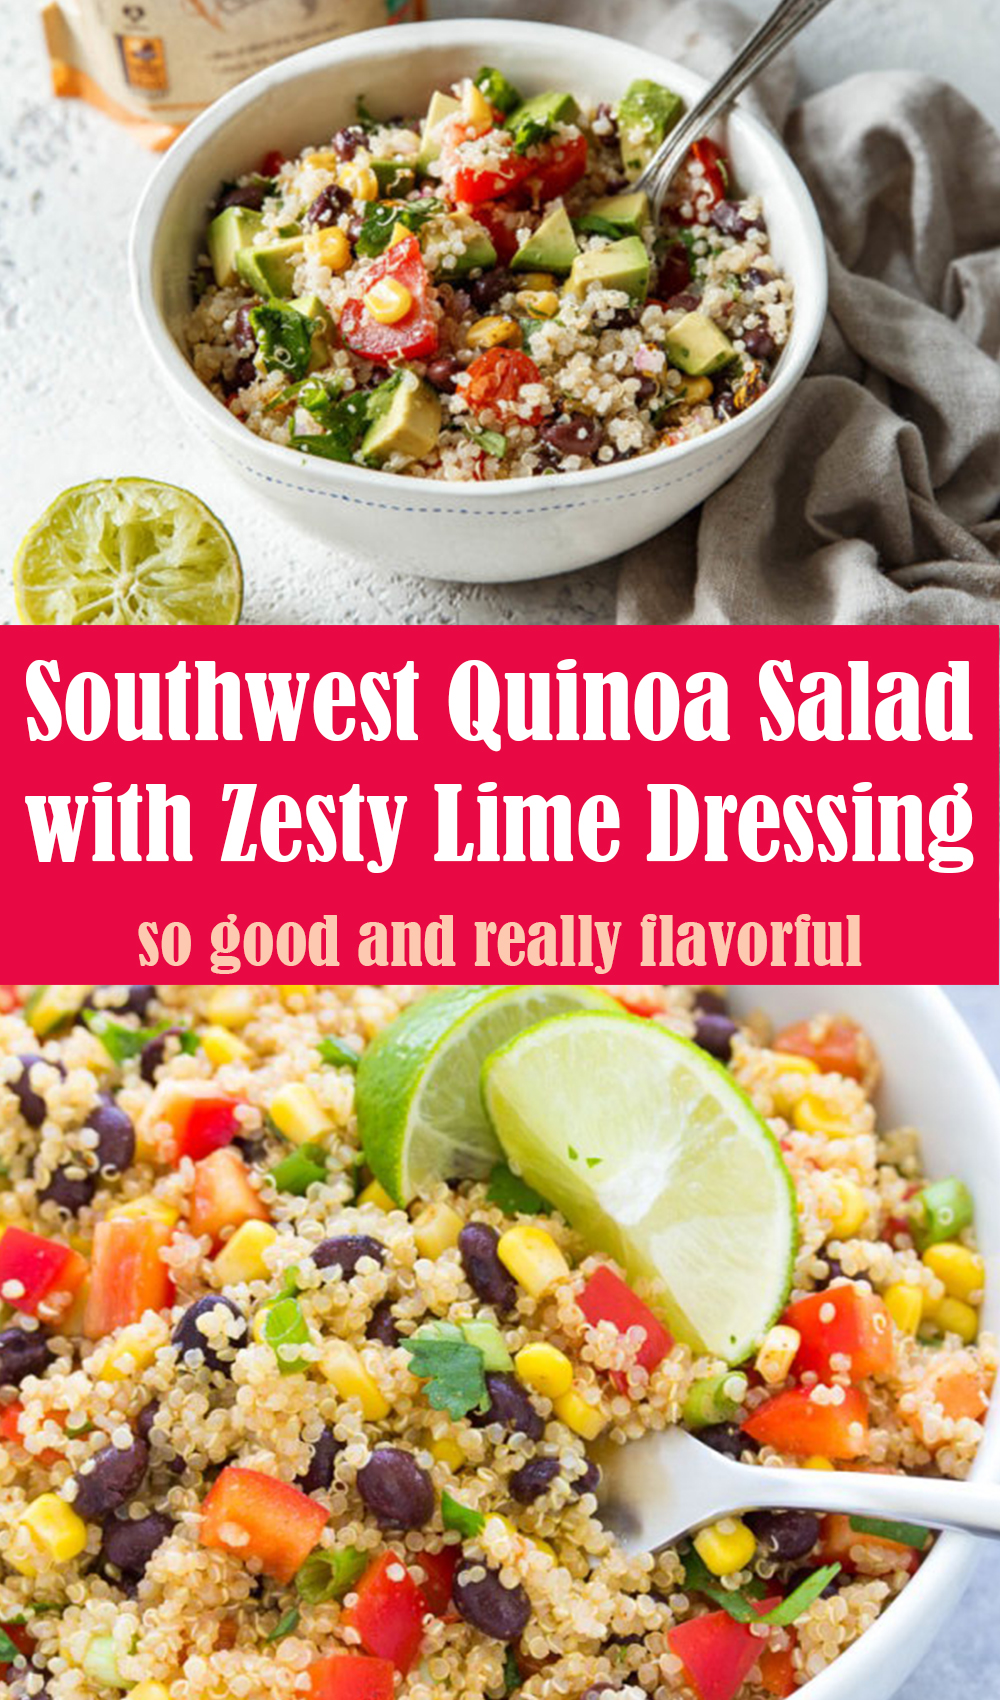 Southwest Quinoa Salad with Zesty Lime Dressing